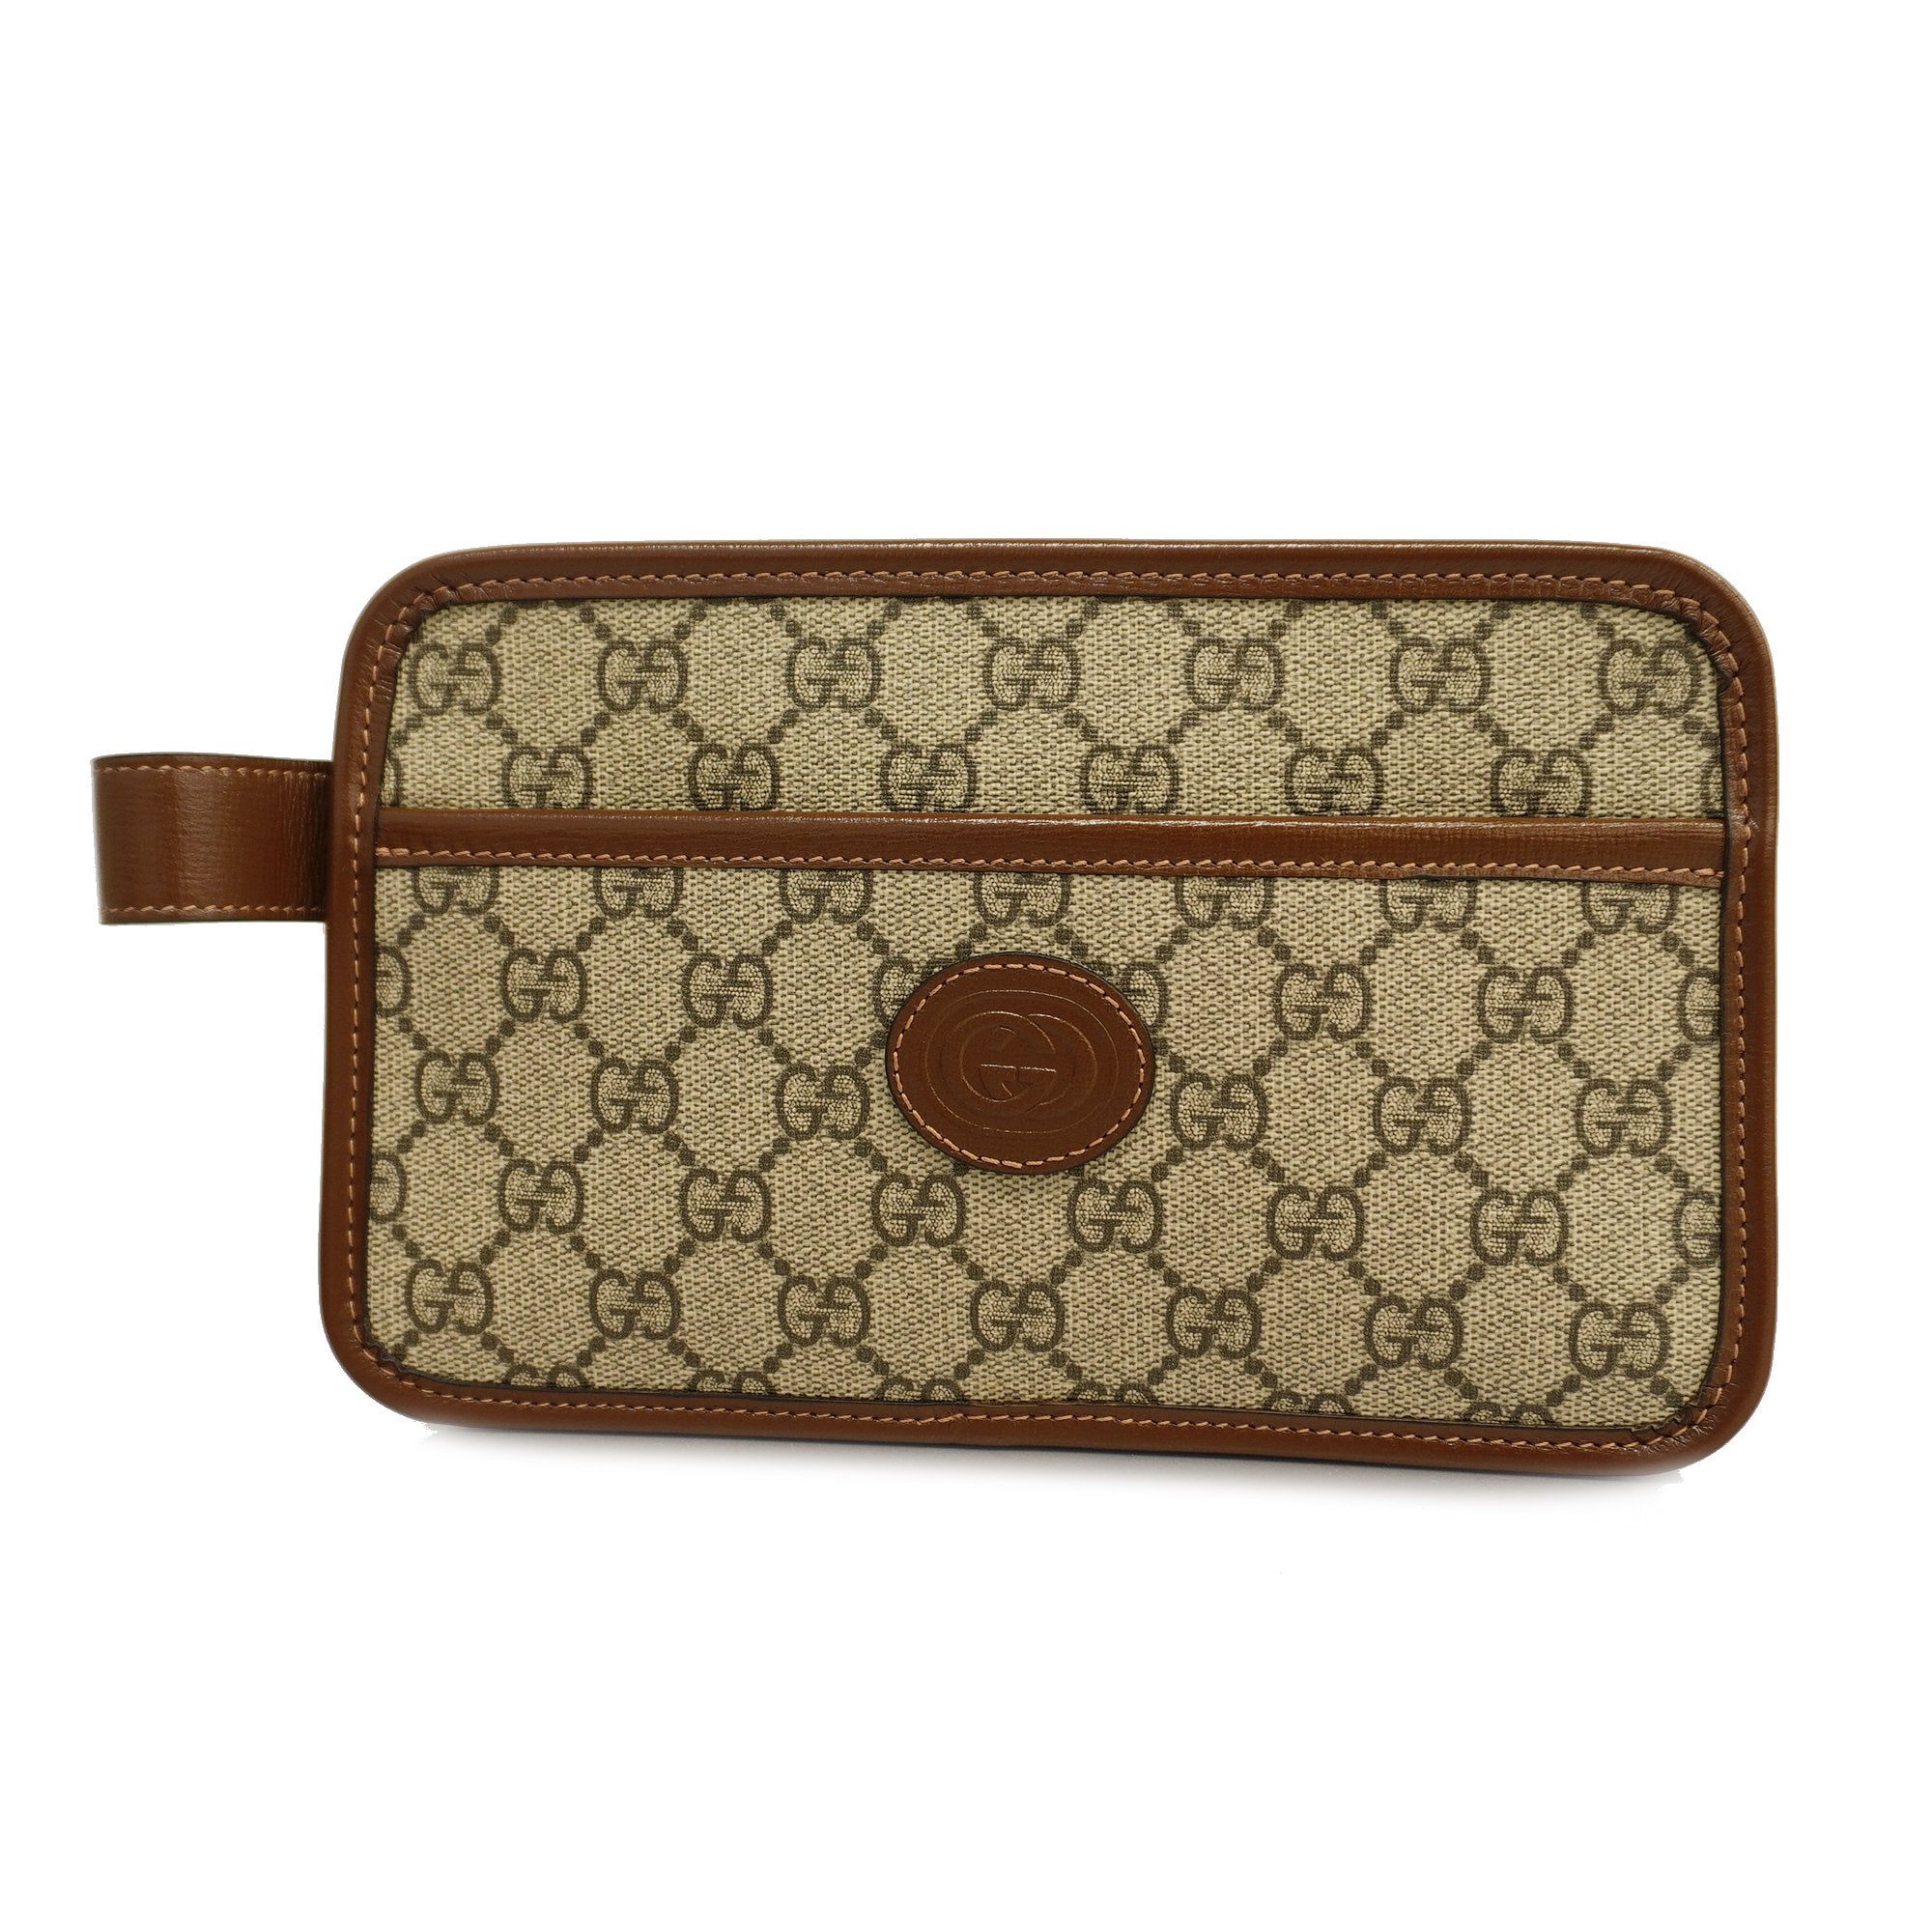 Gucci brown Ophidia GG Supreme Clutch Bag